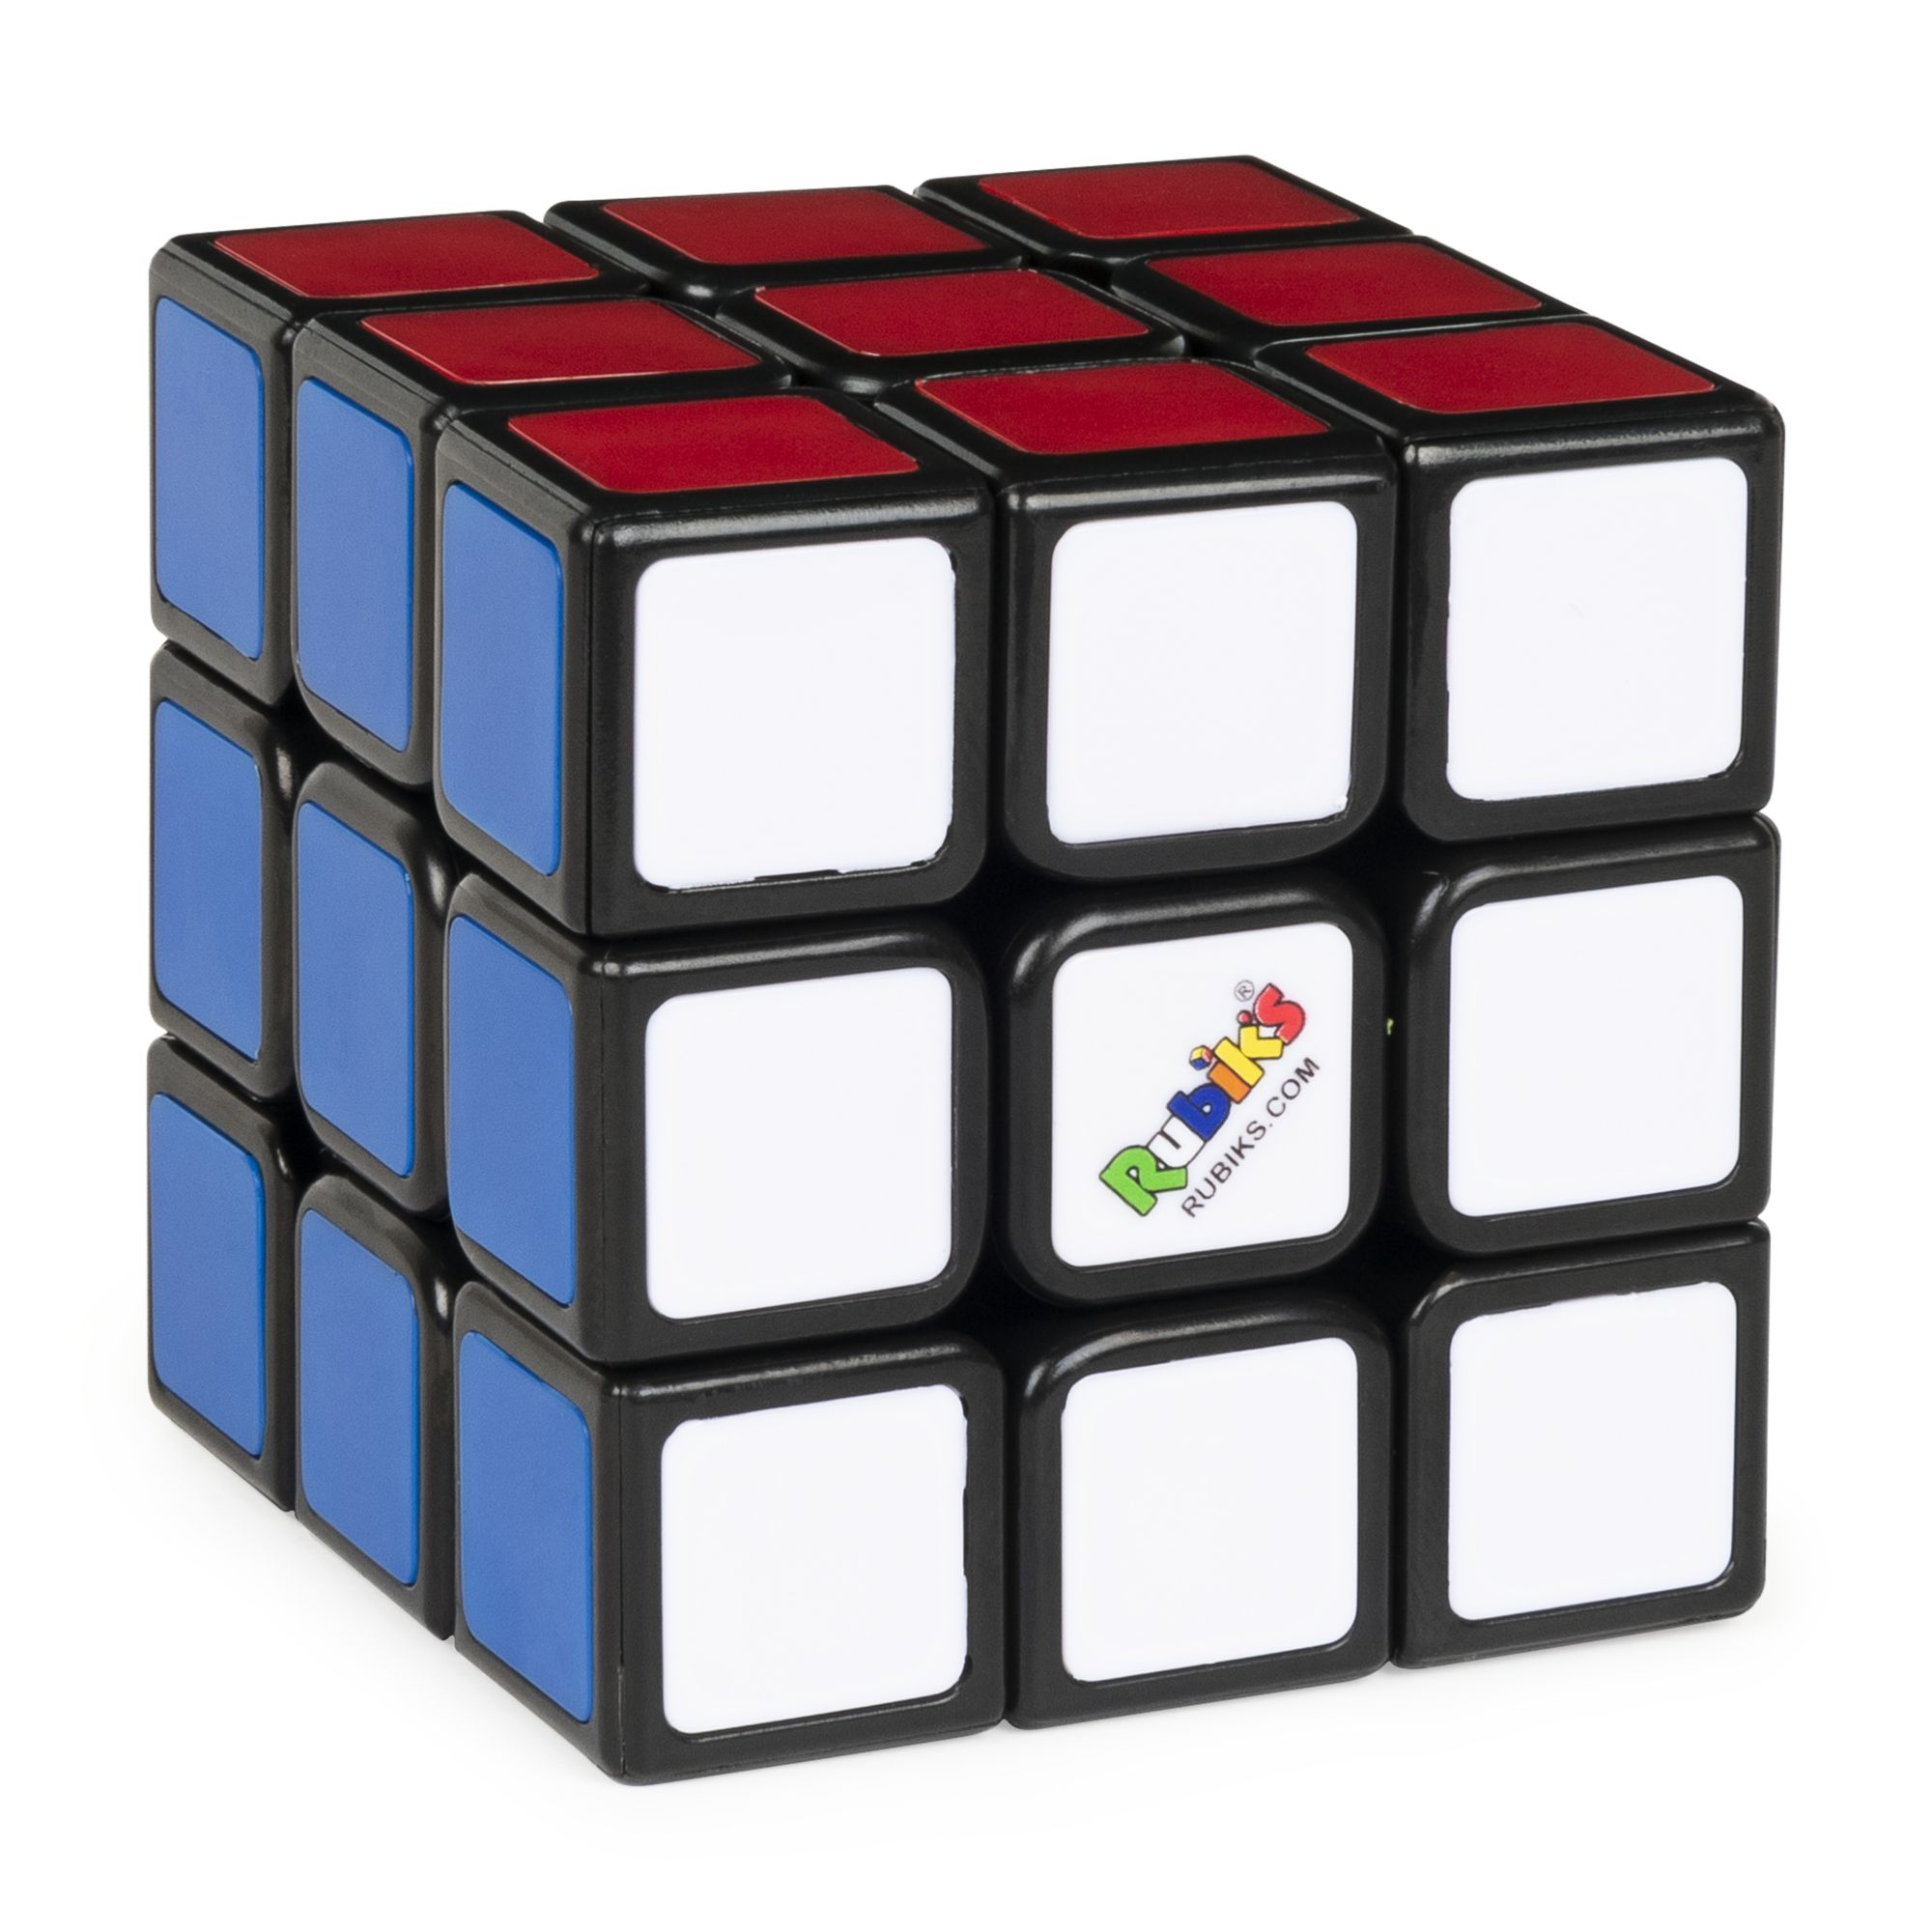 Rubik's Race Game: Metallic Edition